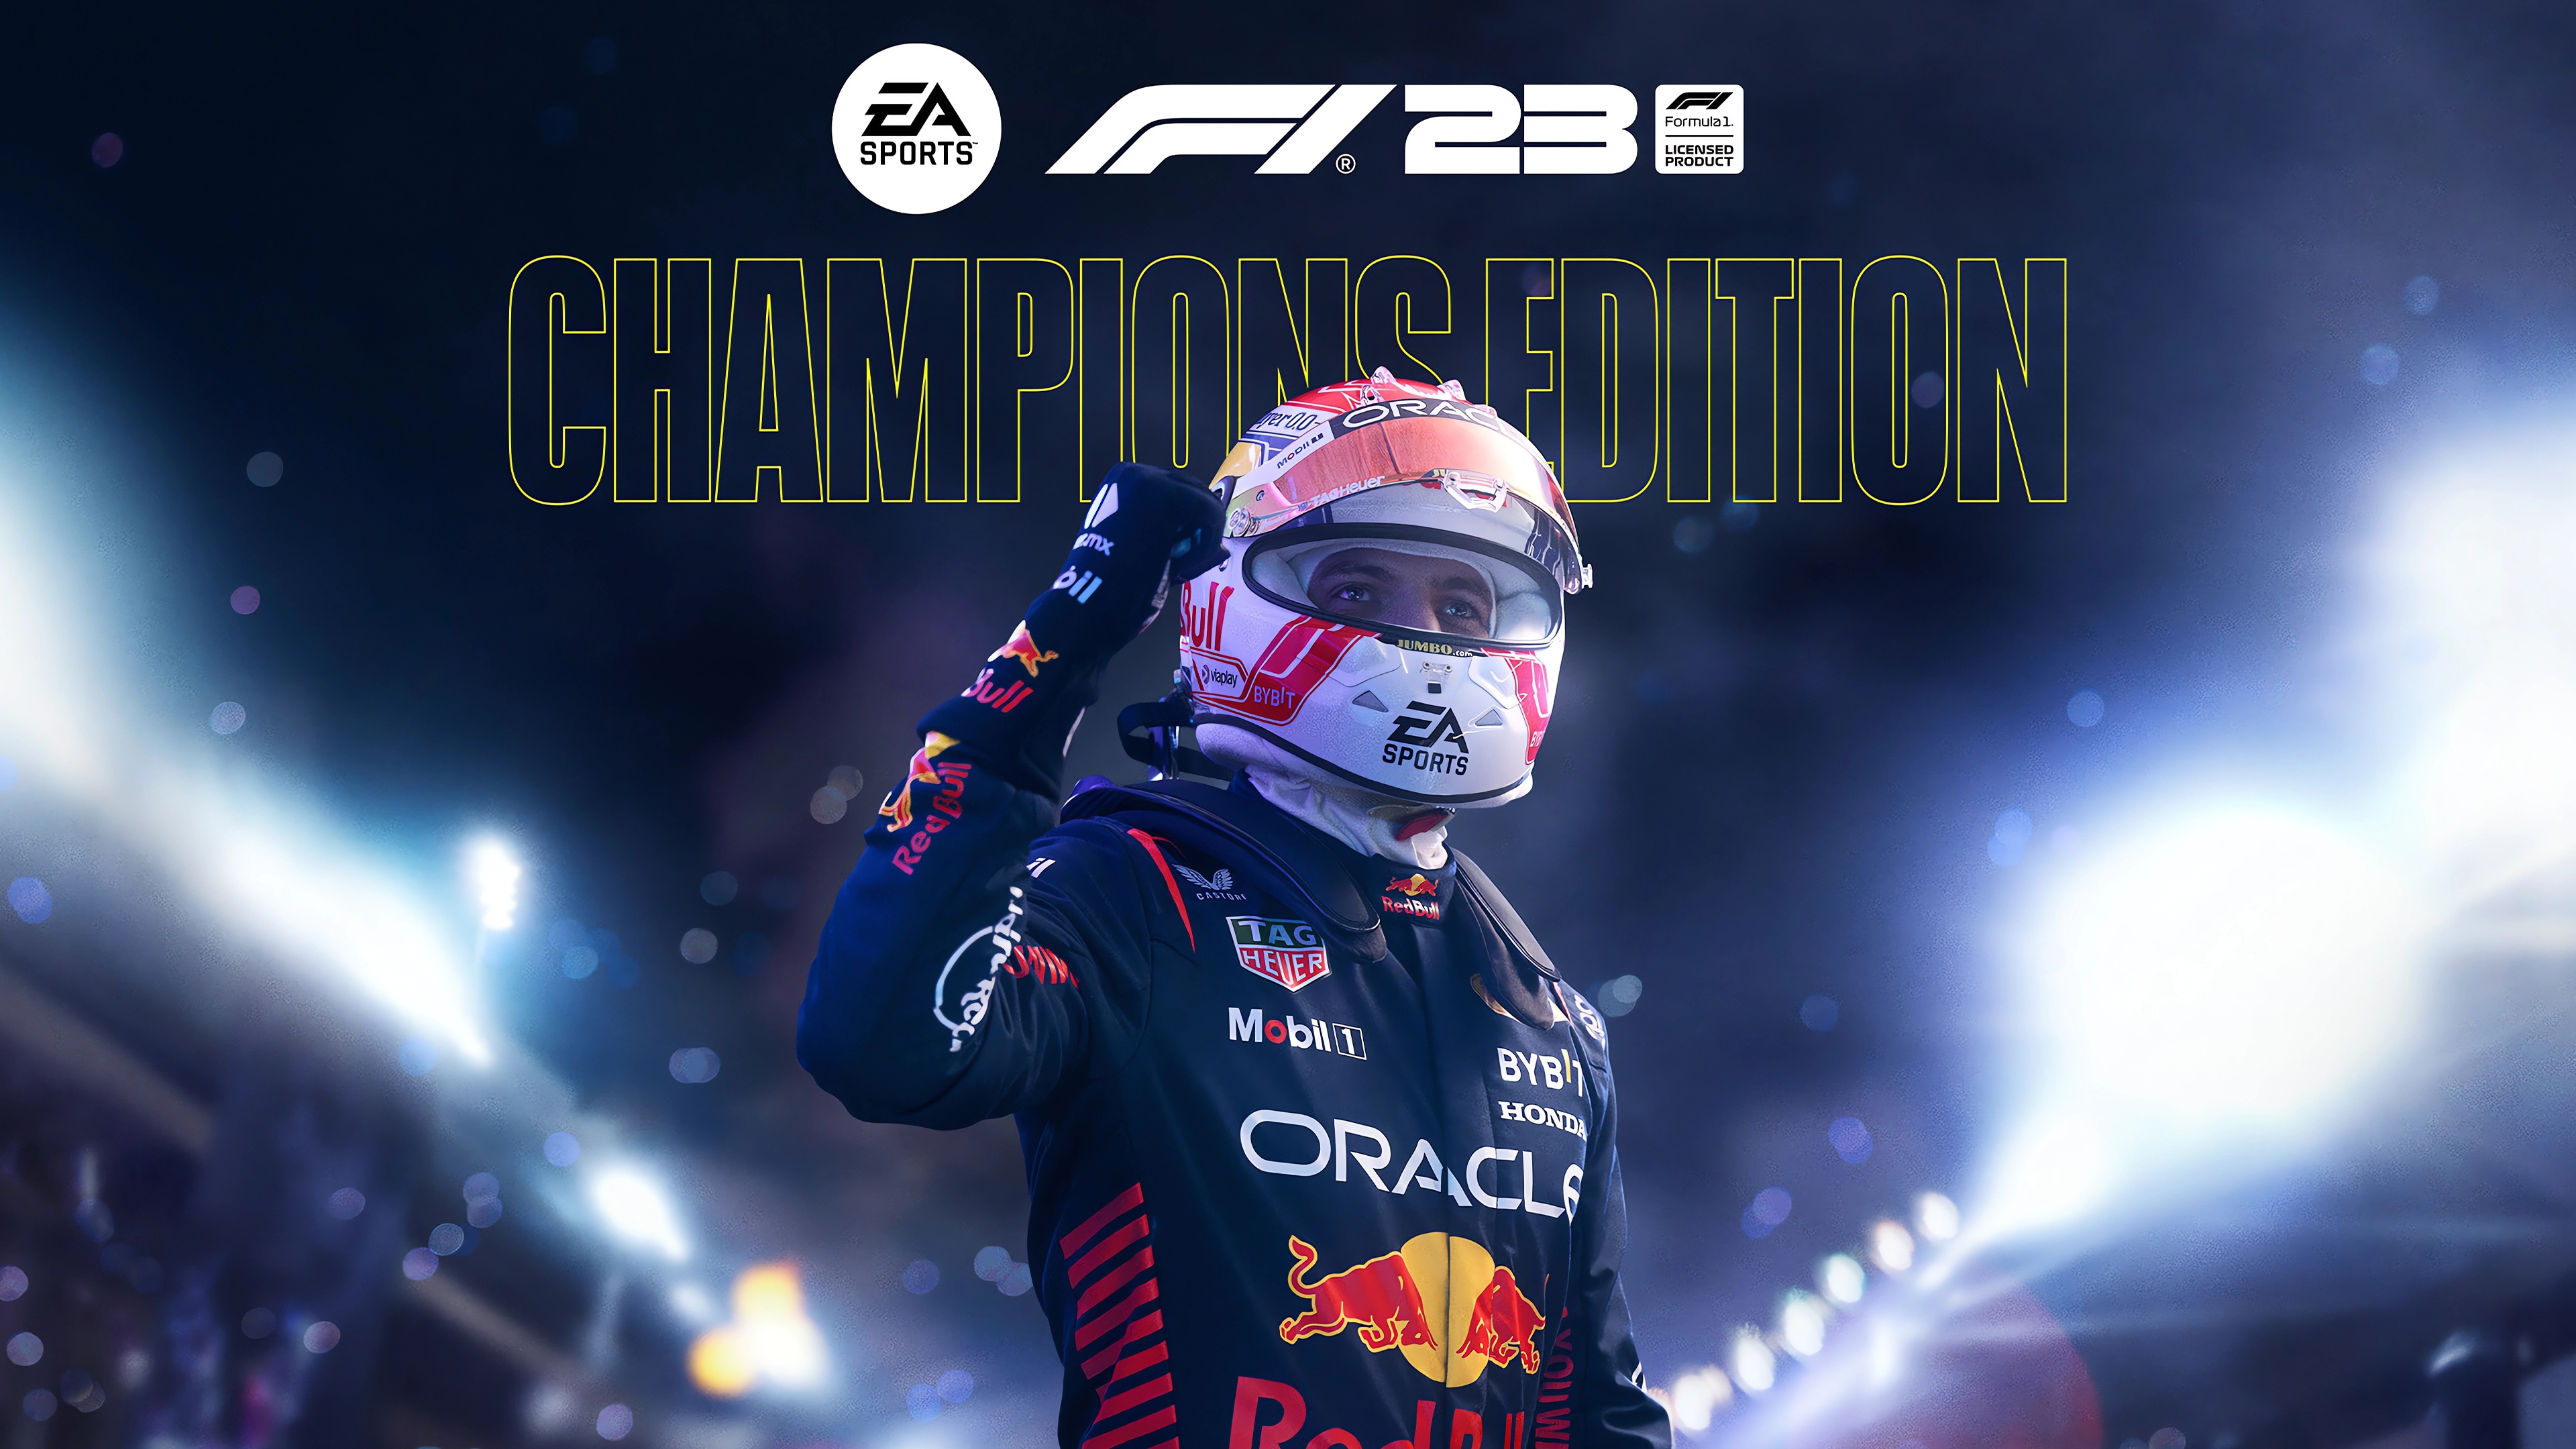 Buy F1® 22 Champions Edition Xbox One & Xbox Series X, S